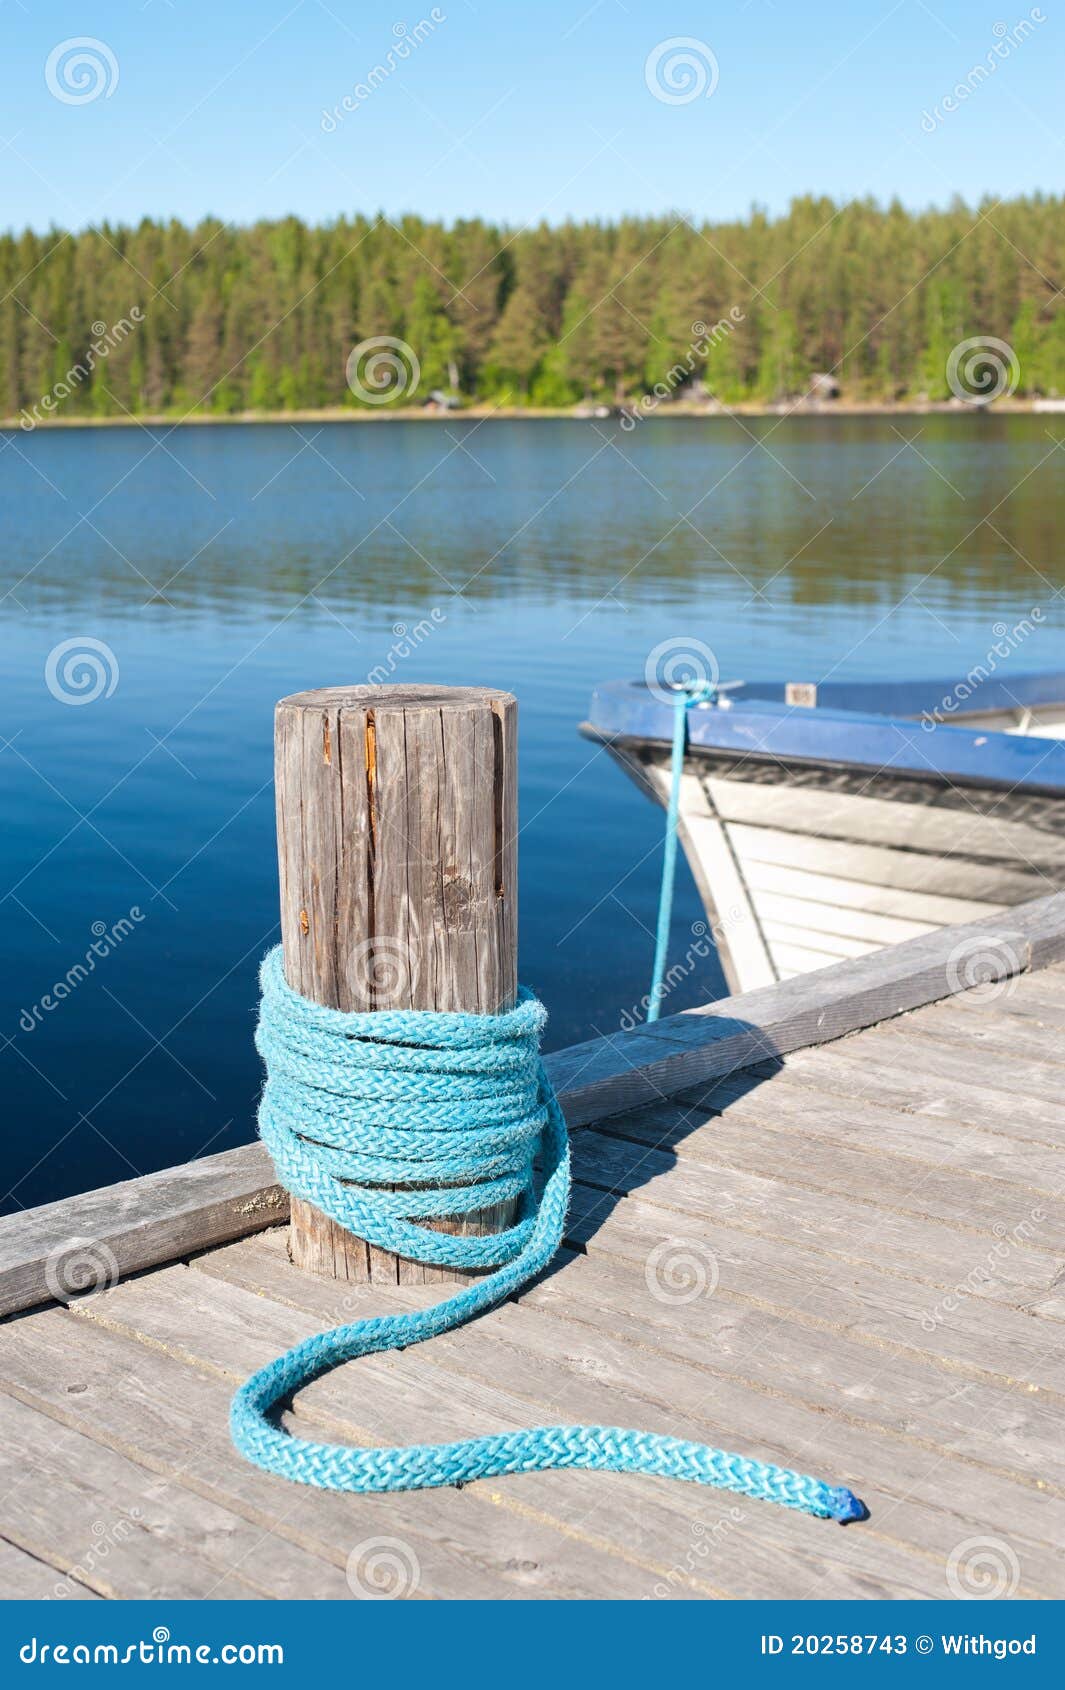 a lake berth